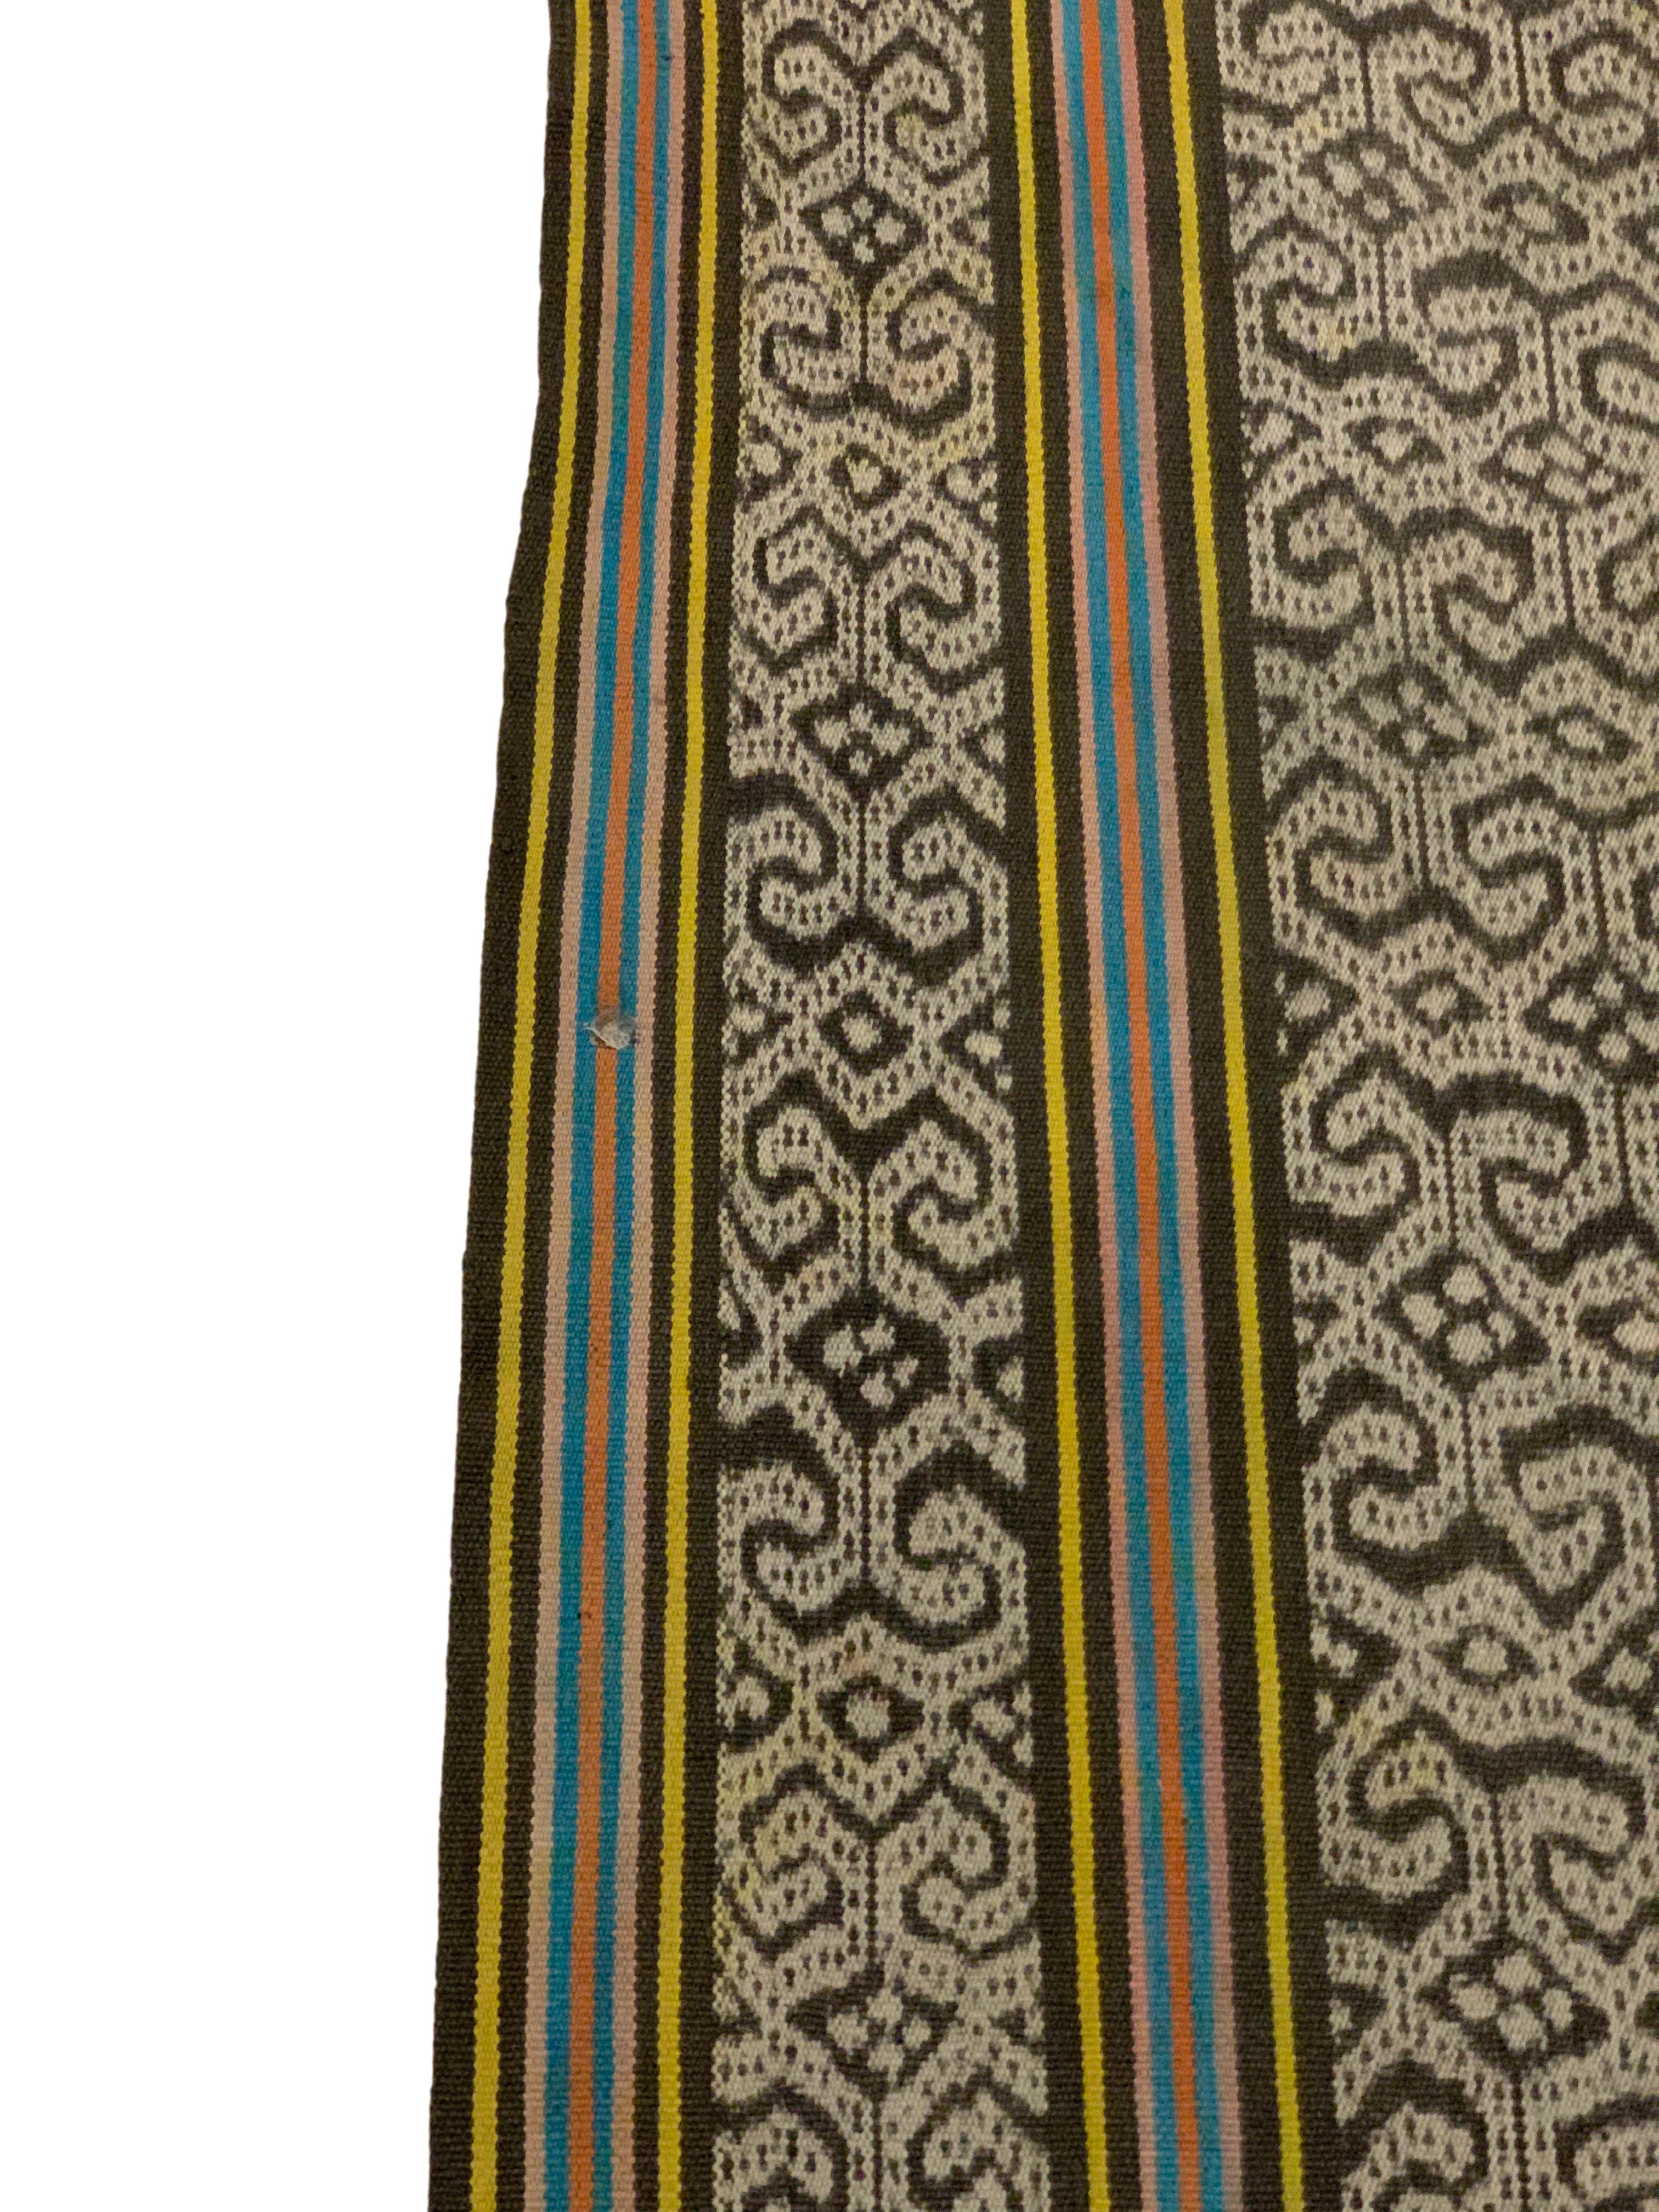 Long ikat Textile from Sumba Island Tribal Motifs, Indonesia In Good Condition In Jimbaran, Bali